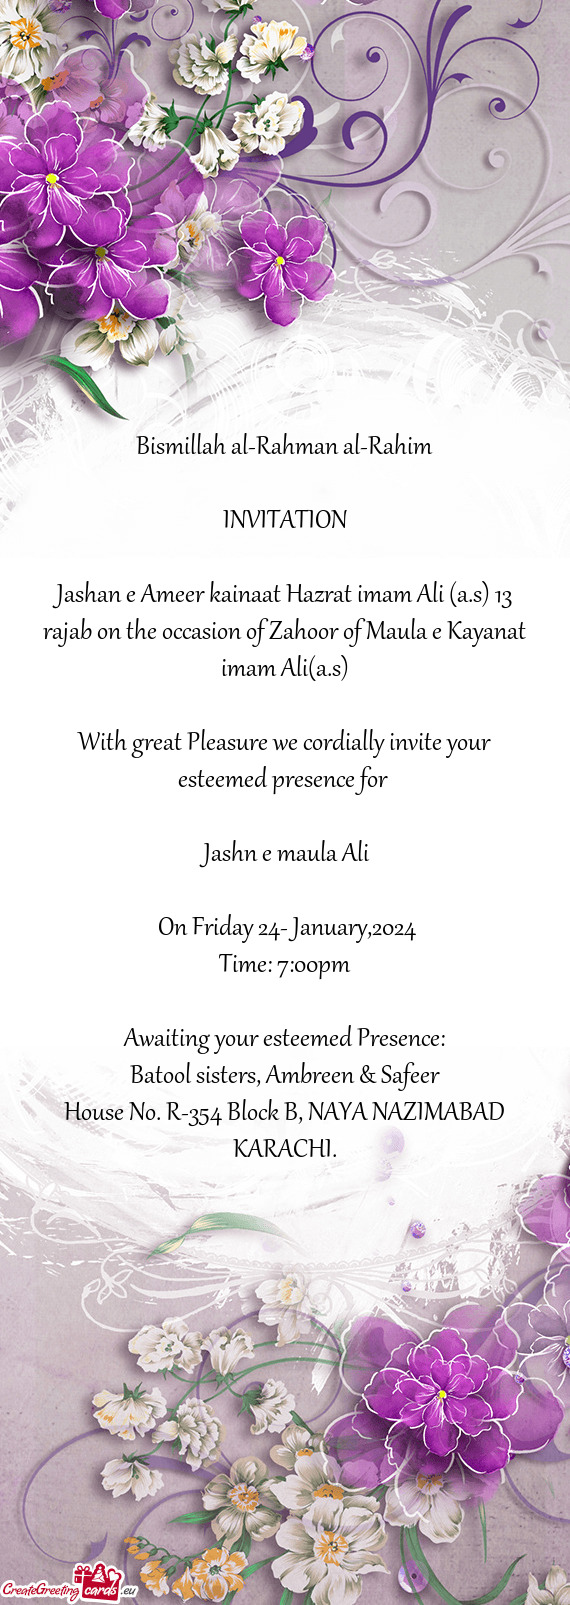 Jashan e Ameer kainaat Hazrat imam Ali (a.s) 13 rajab on the occasion of Zahoor of Maula e Kayanat i